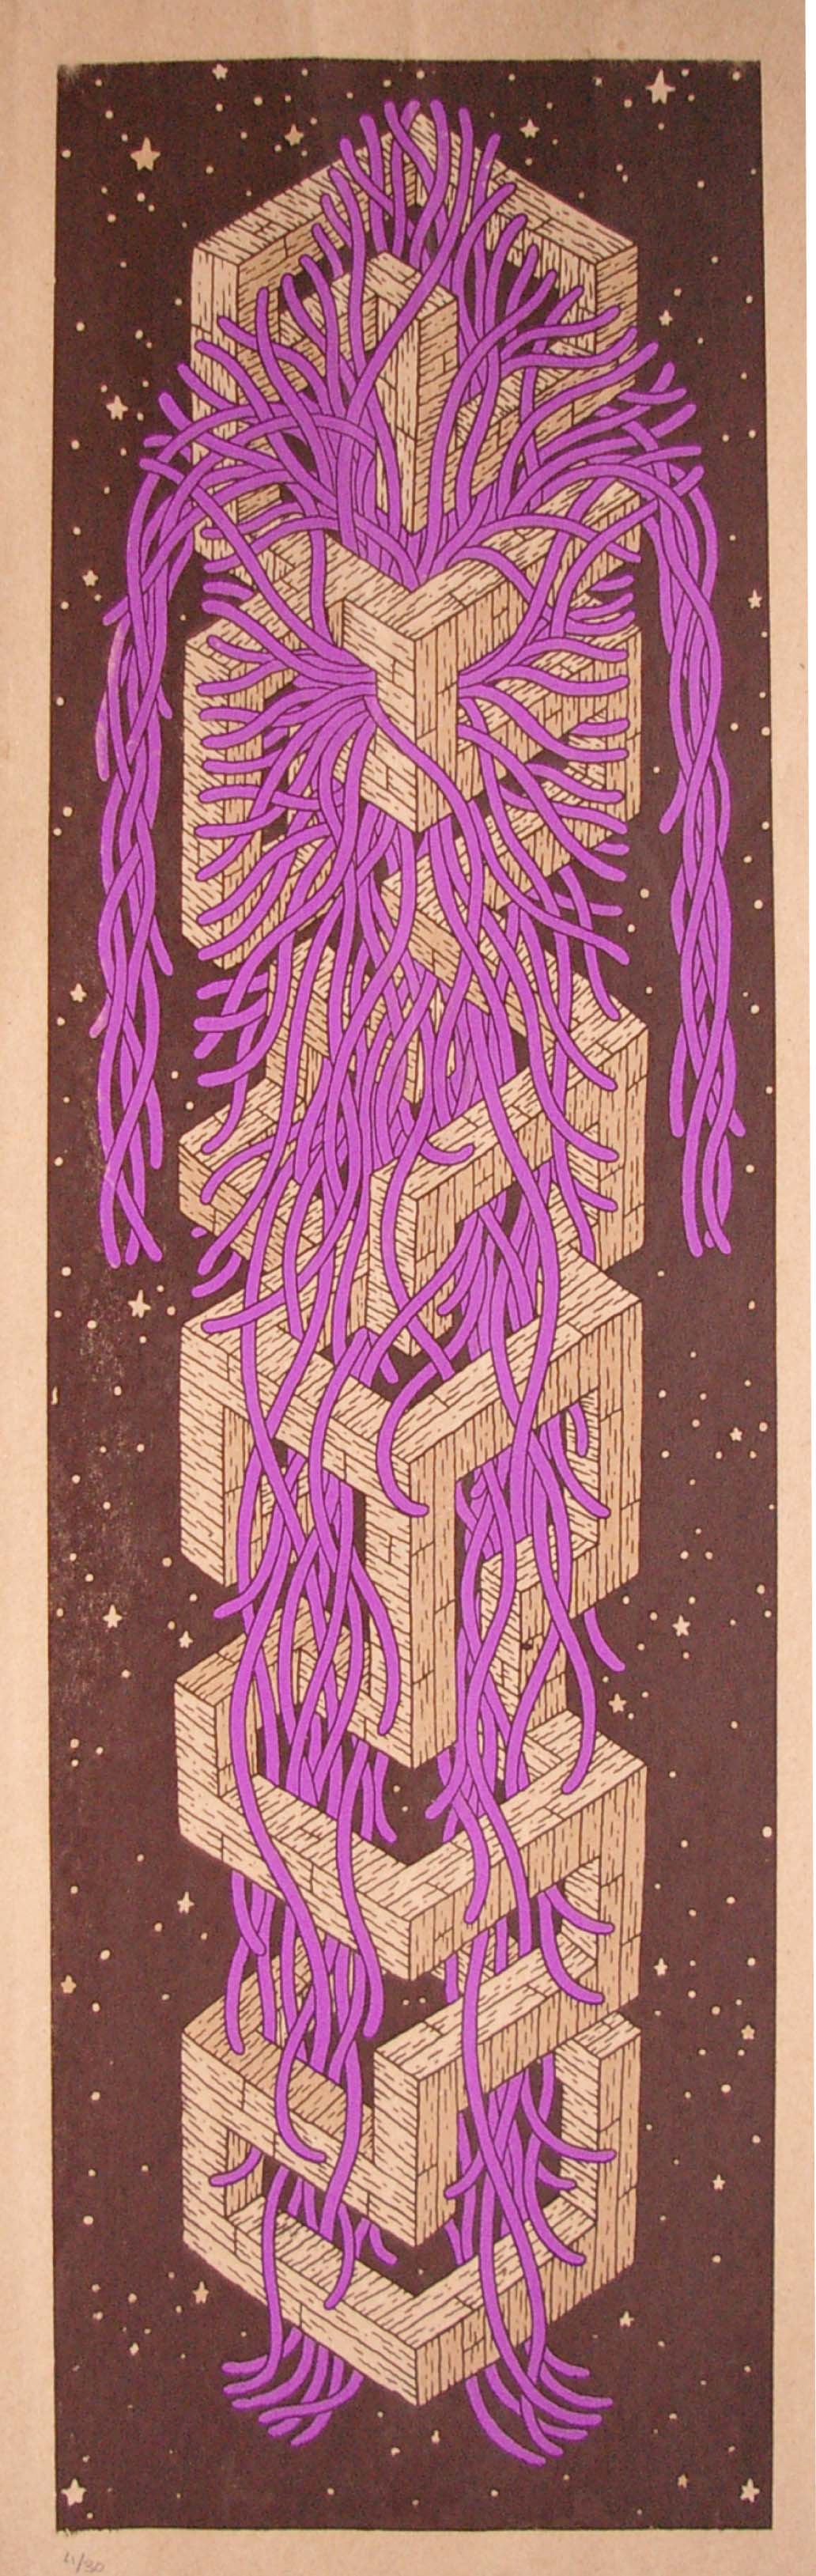 cosmic-nerv-purple.jpg